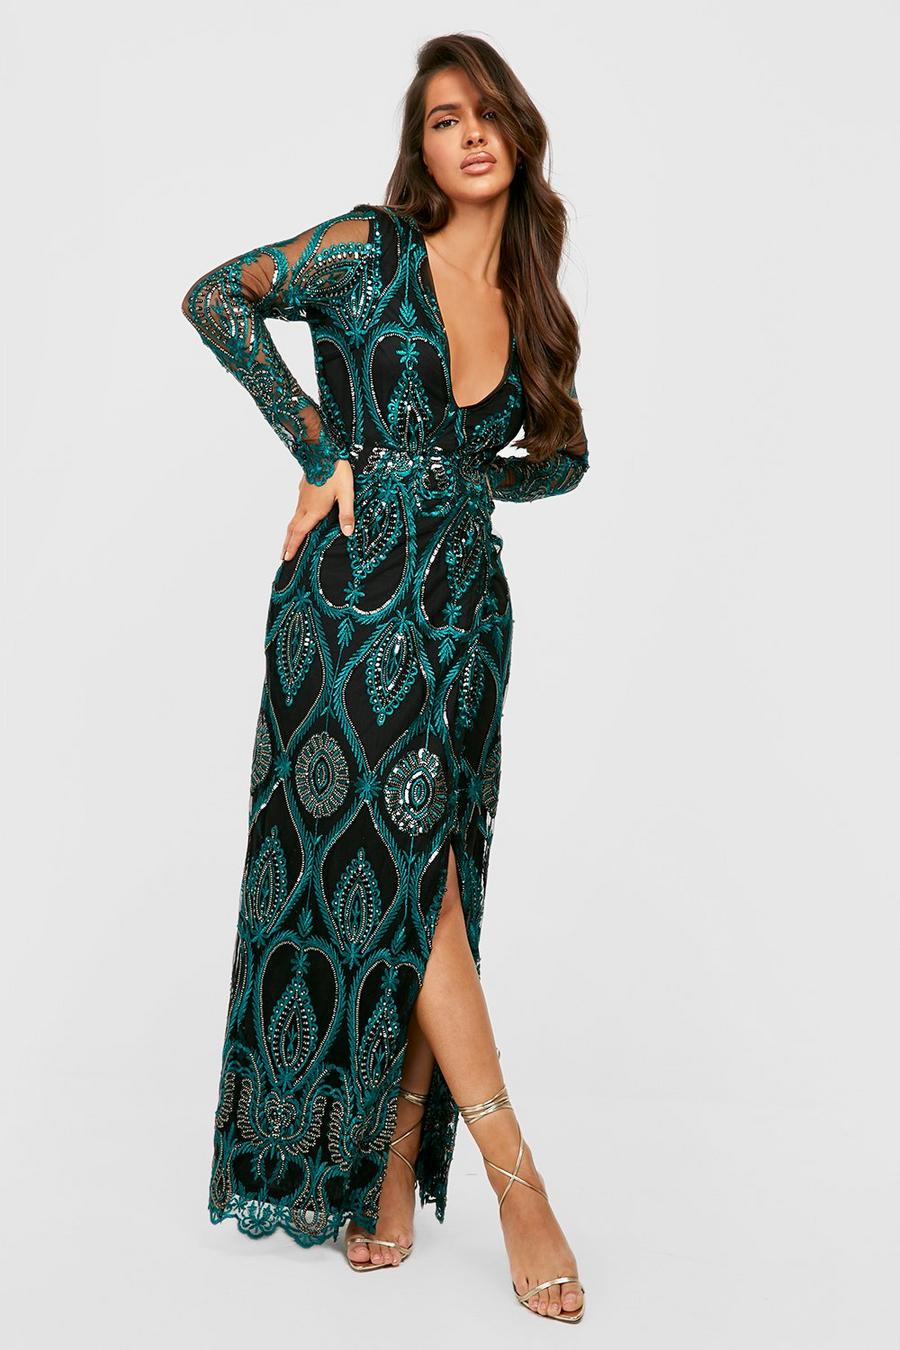 Emerald שמלת מקסי למסיבות מבד דמשק עם מחשוף